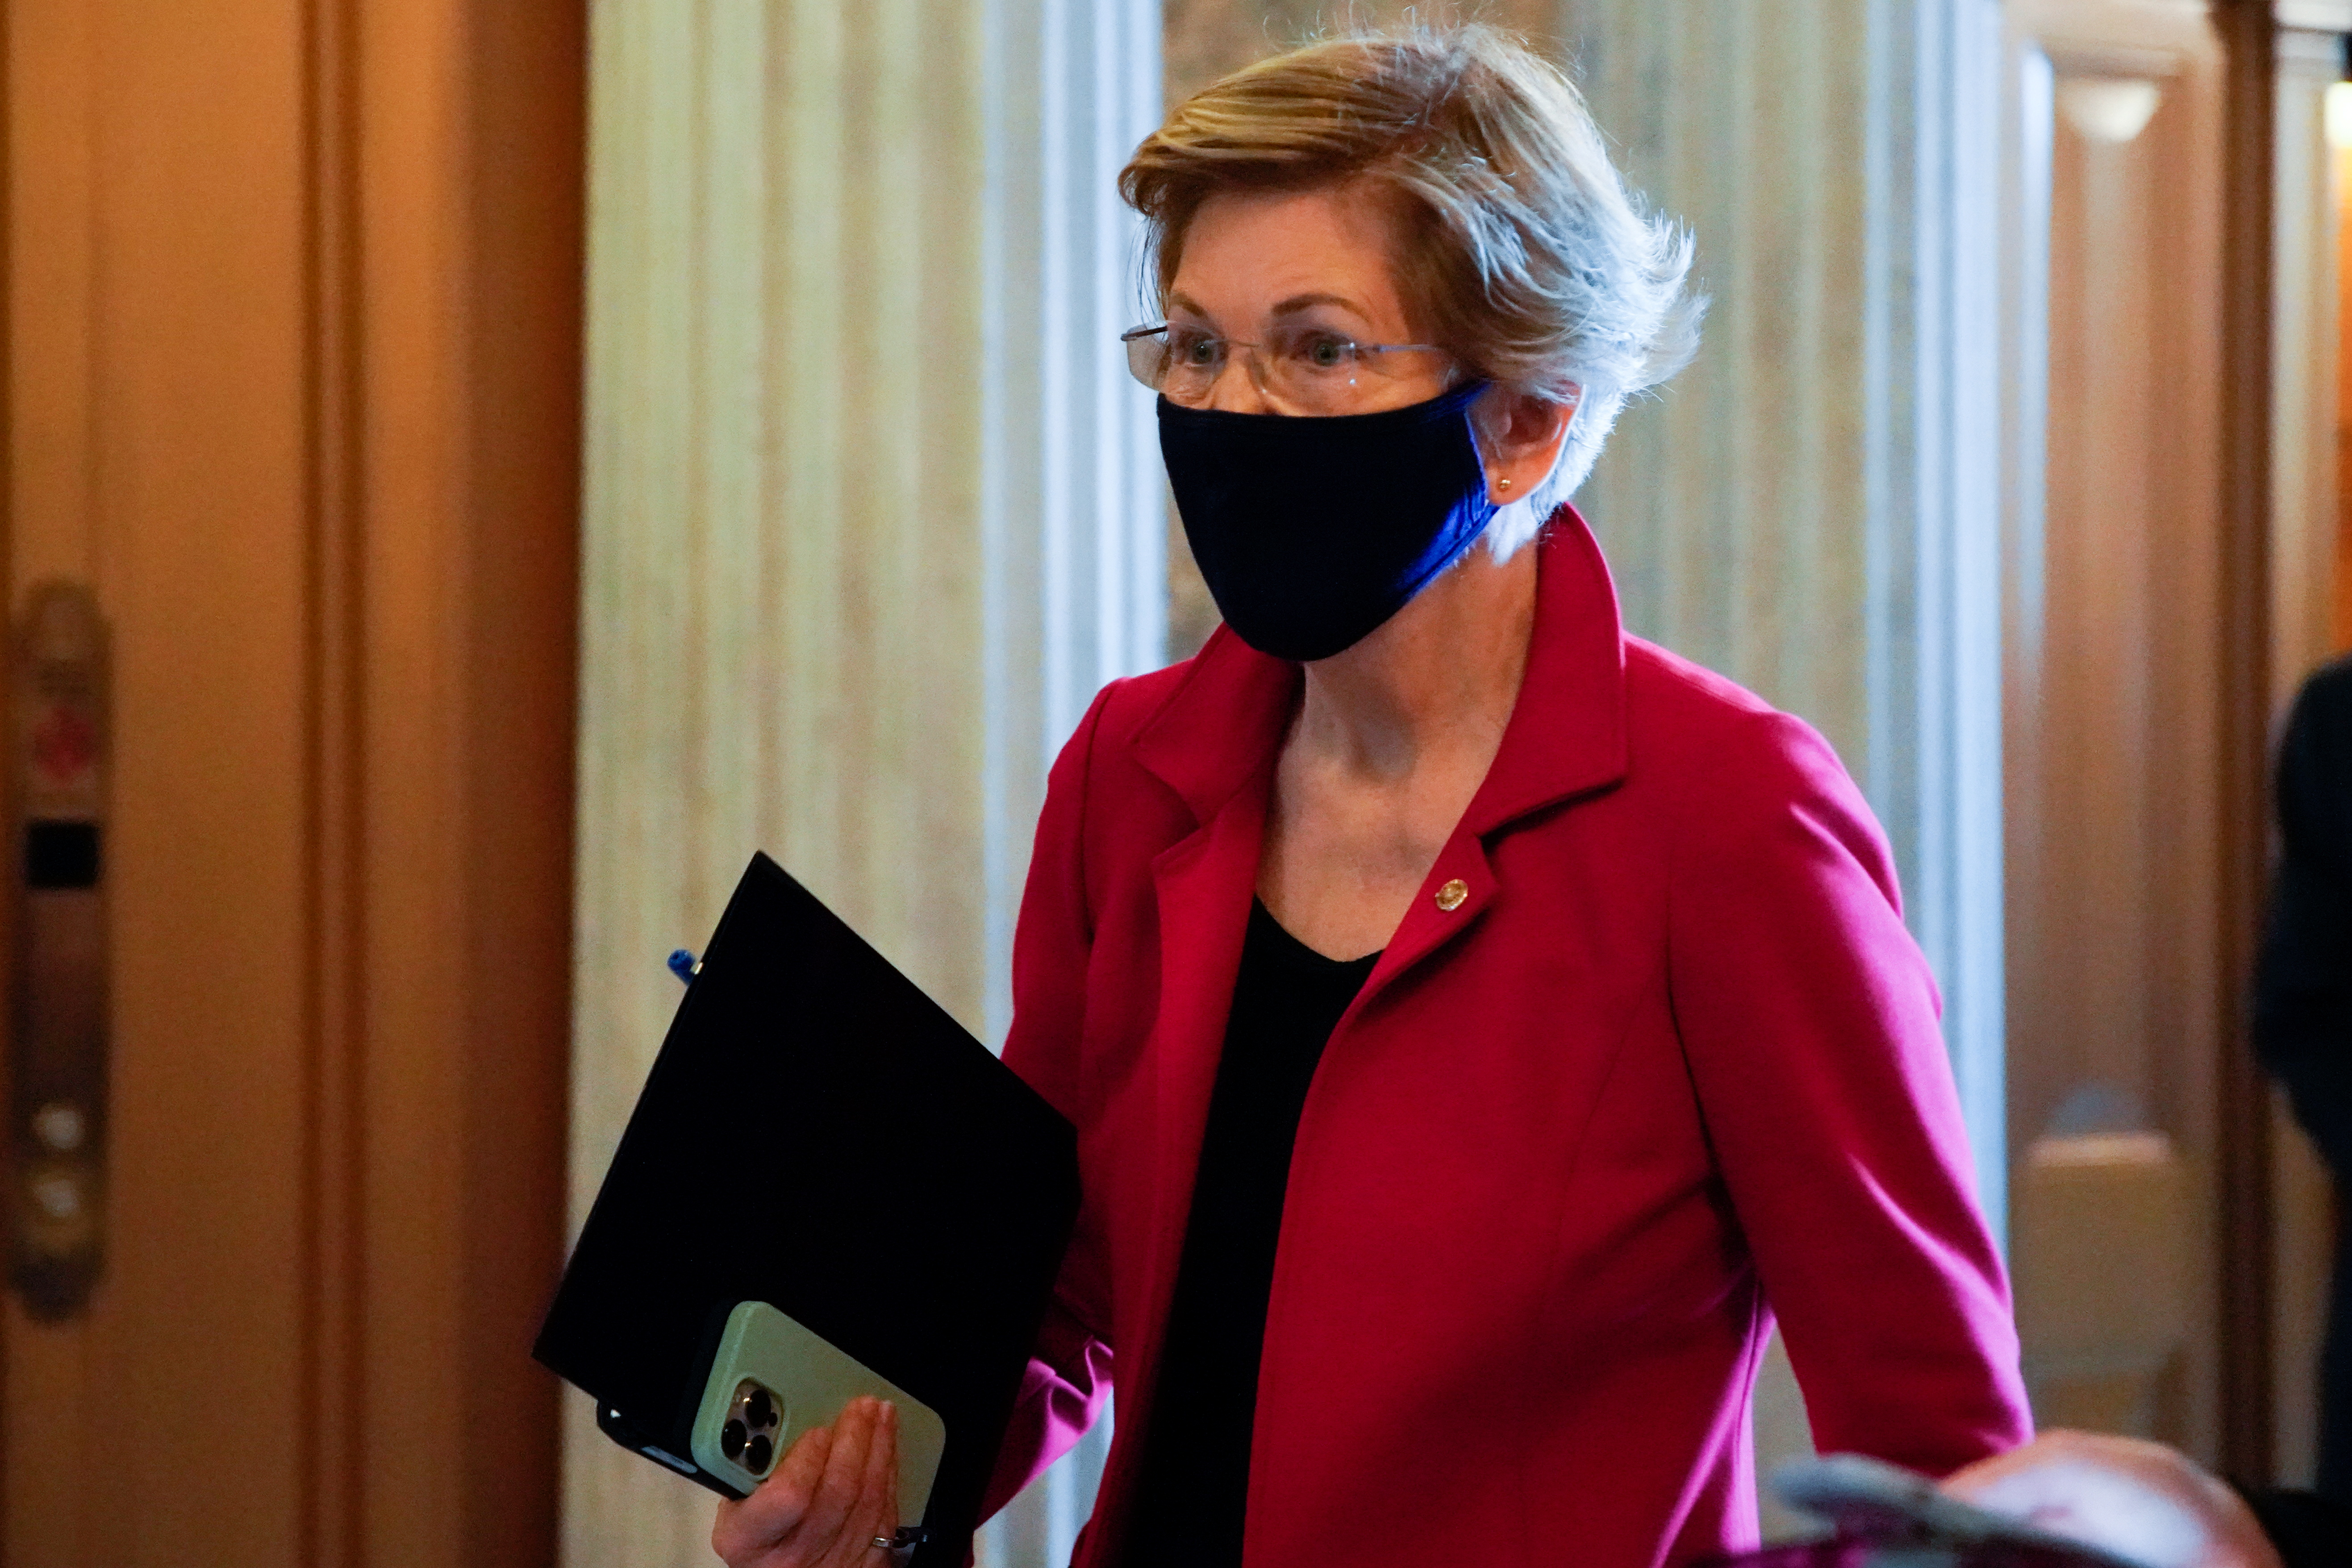 U.S. Senator Elizabeth Warren (D-MA) walks to the Senate floor during a vote at the U.S. Capitol in Washington, U.S., October 26, 2021. REUTERS/Elizabeth Frantz